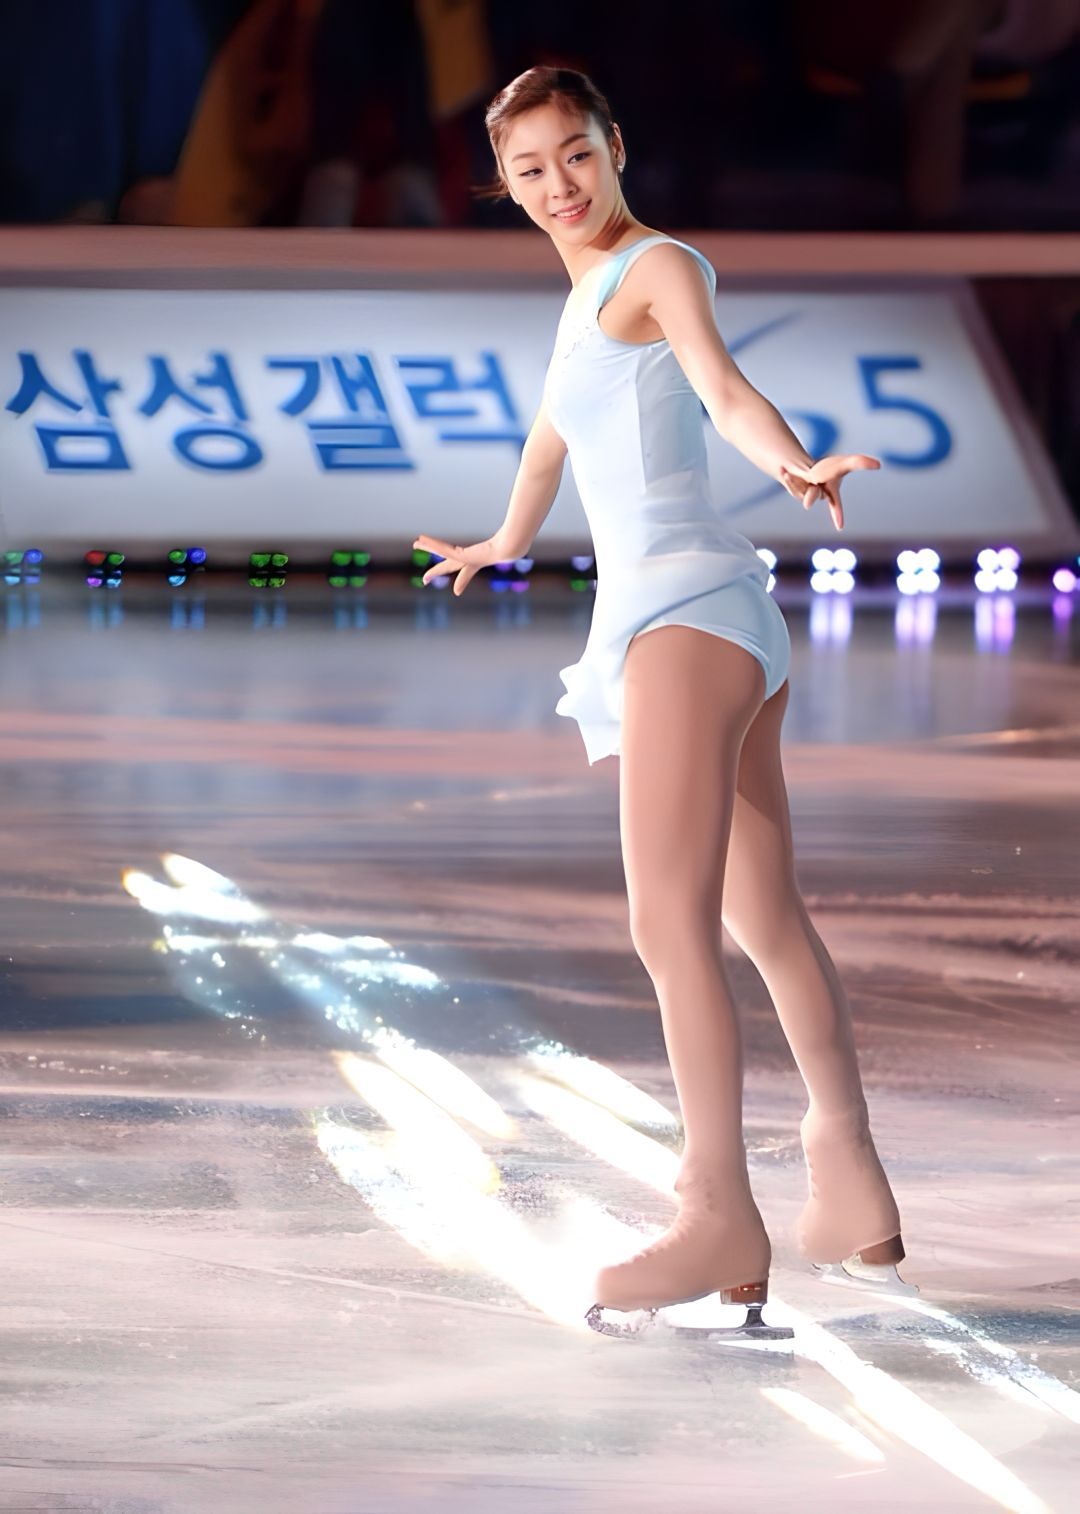 Yuna Kim All That Skate 2014.jpeg.remini-enhanced.jpg